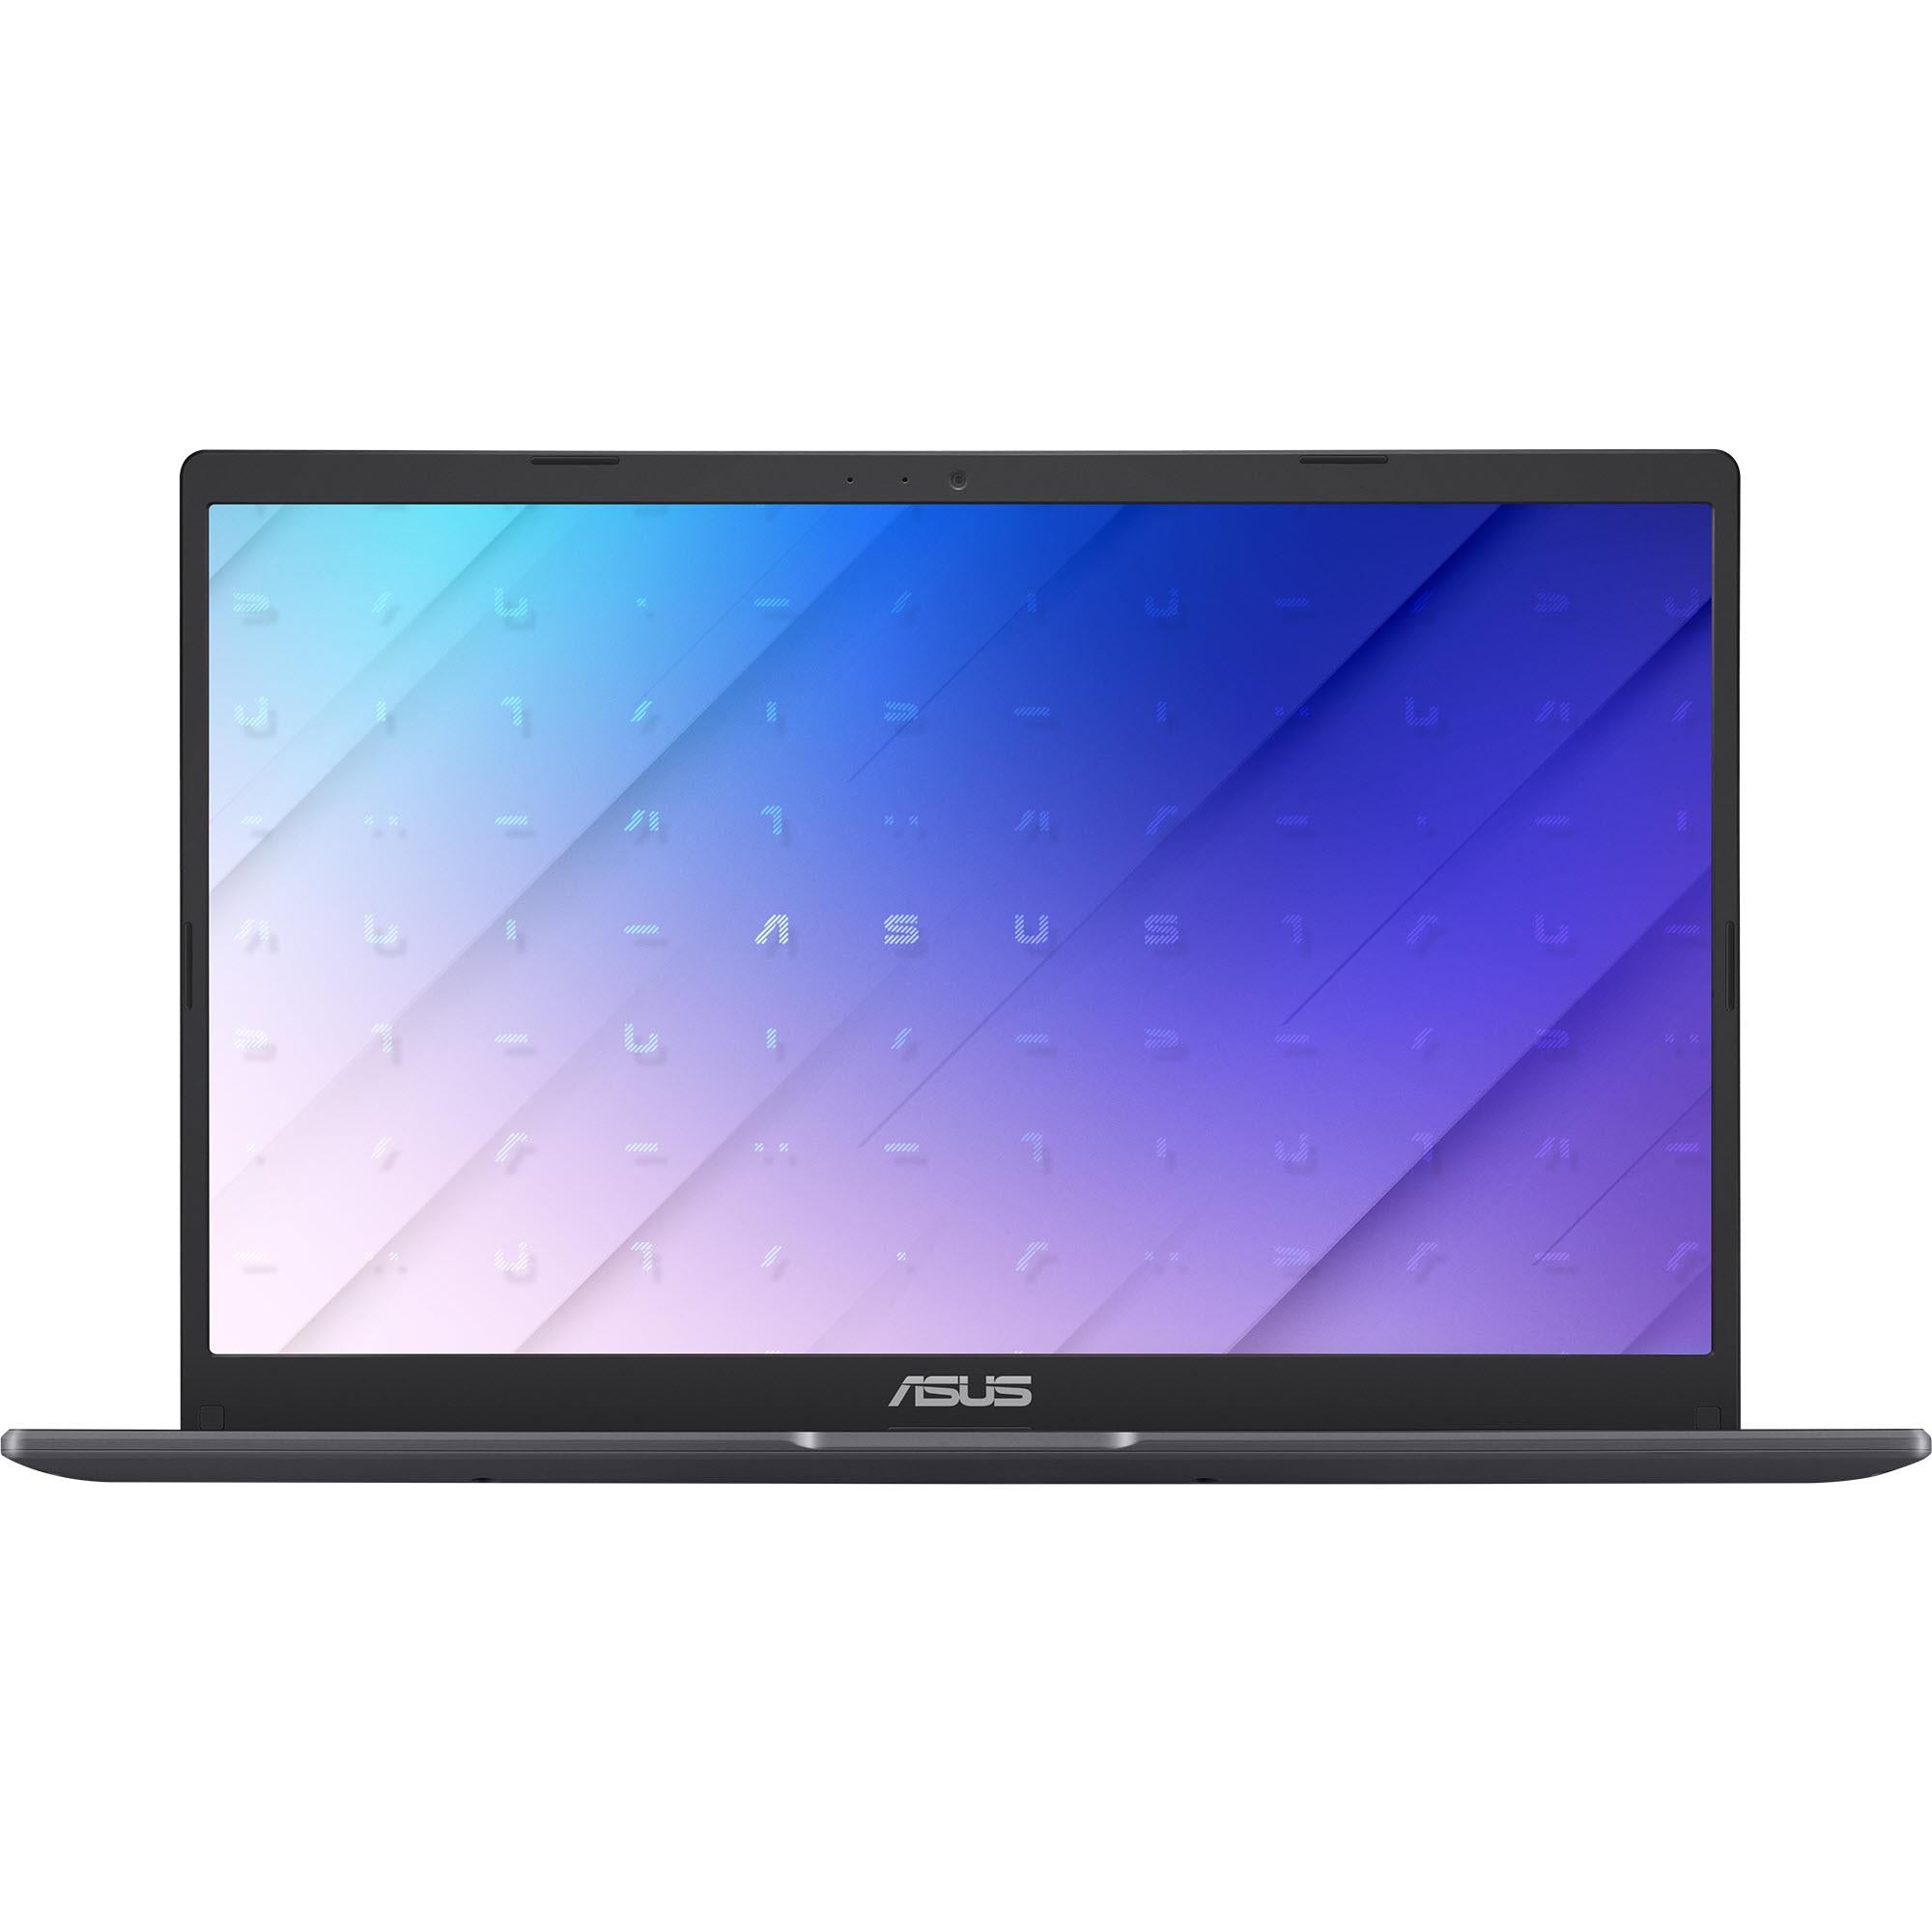 Precio Asus Laptop L210 11 6 Ultra Thin Intel Celeron N4020 Processor 4gb Ram 64gb Emmc Storage Windows